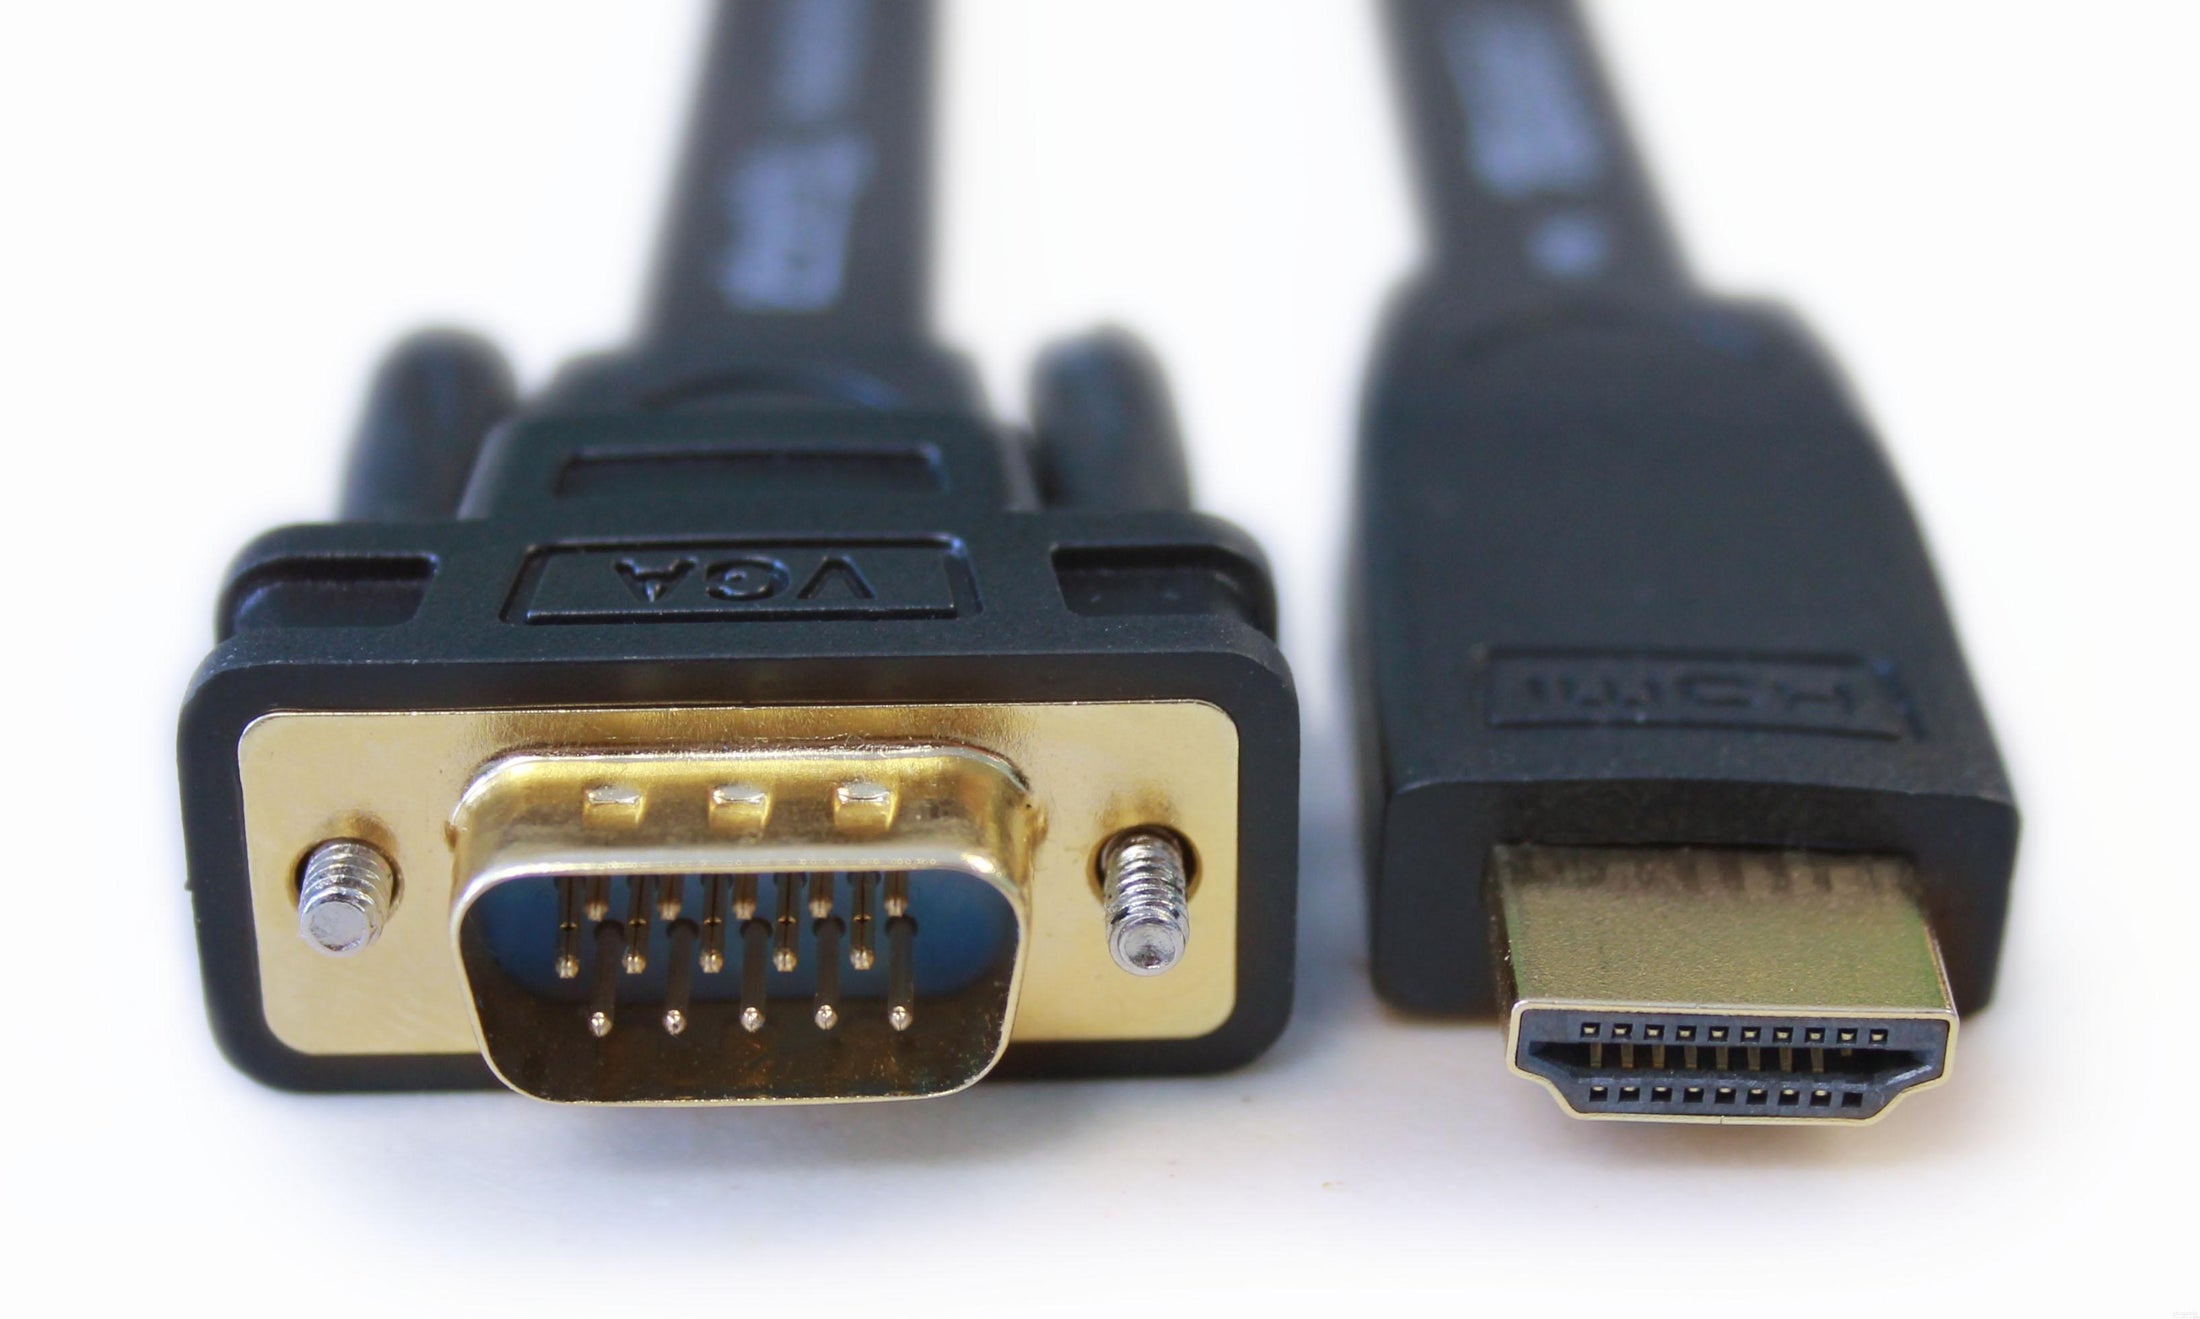 HDMI to VGA Cable 1,8 m Active - HDMI & DVI Display Adapters, Display &  Video Adapters